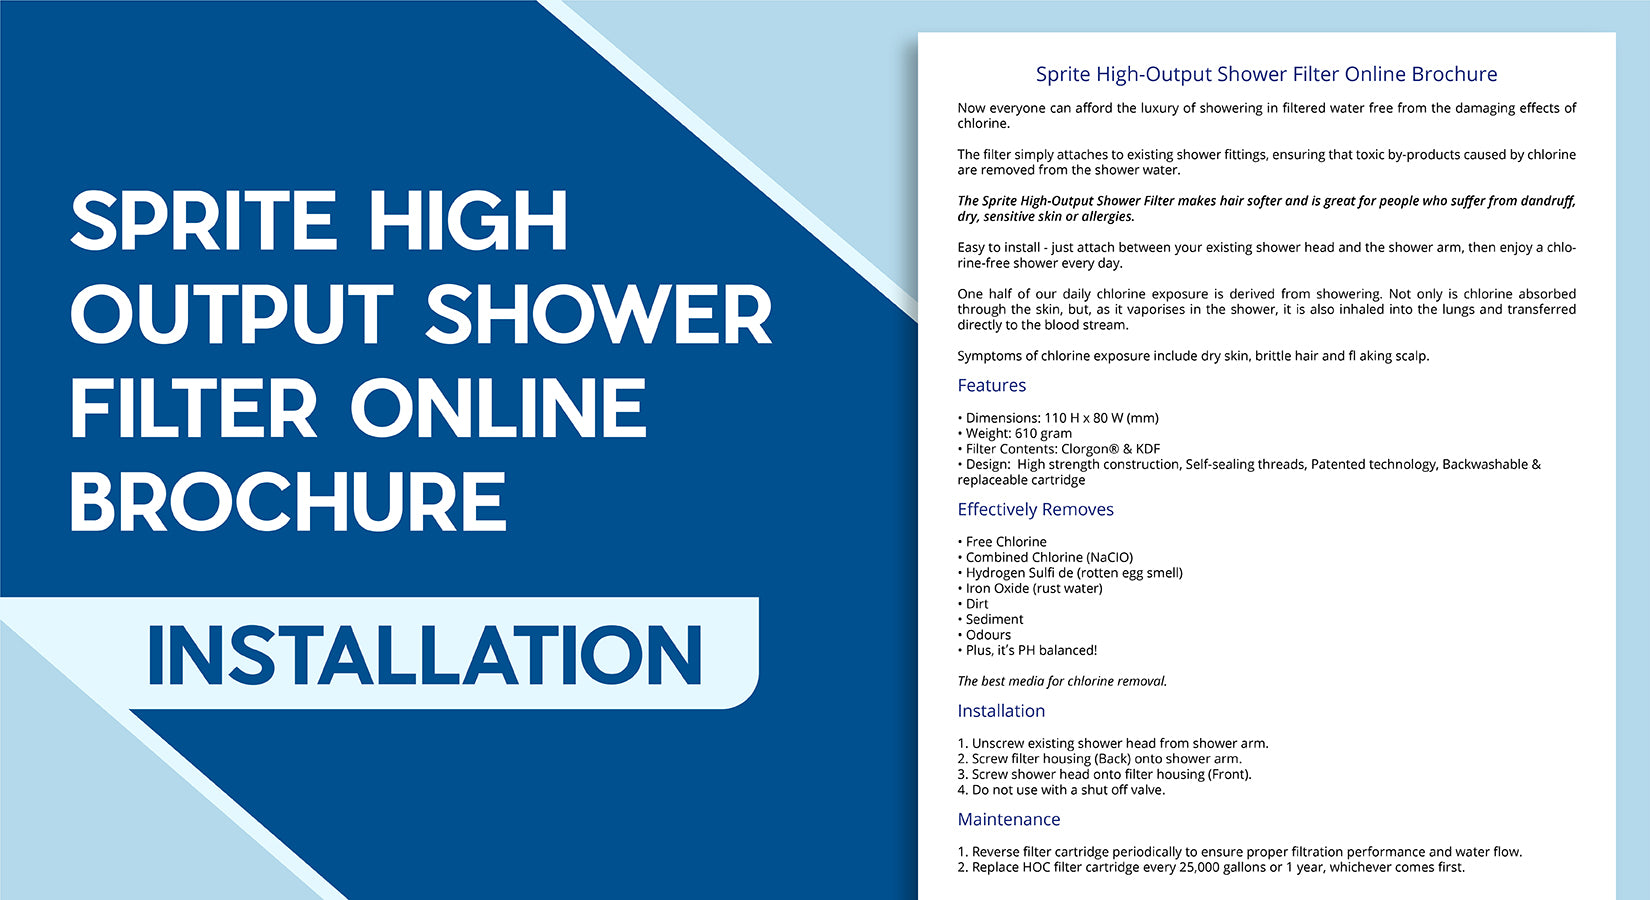 Sprite High-Output Shower Filter Online Brochure